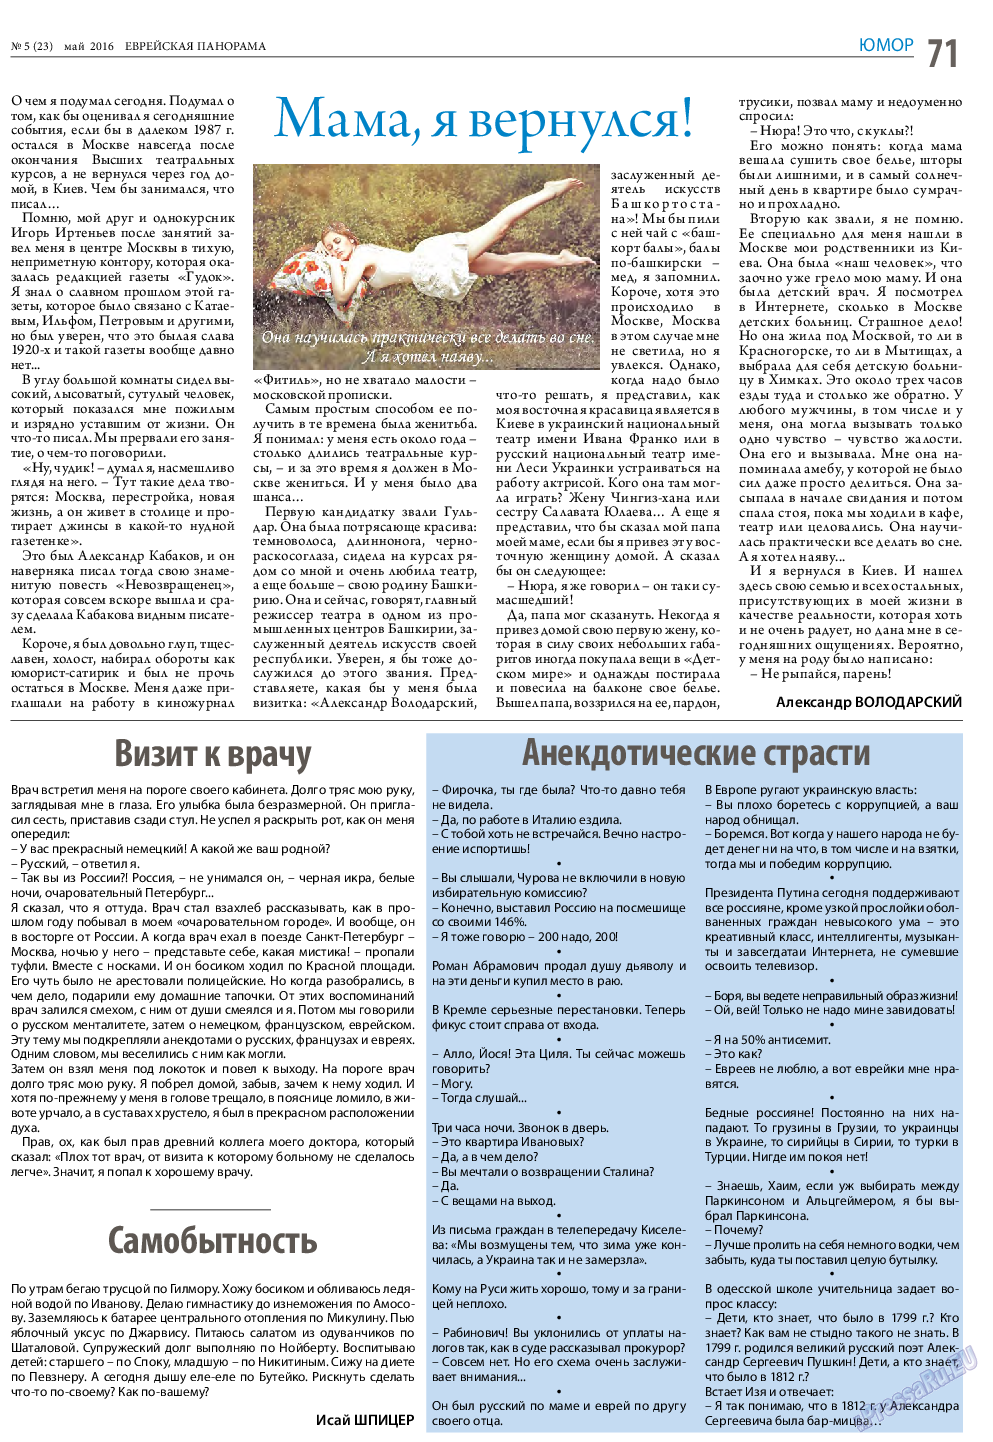 Еврейская панорама, газета. 2016 №5 стр.71